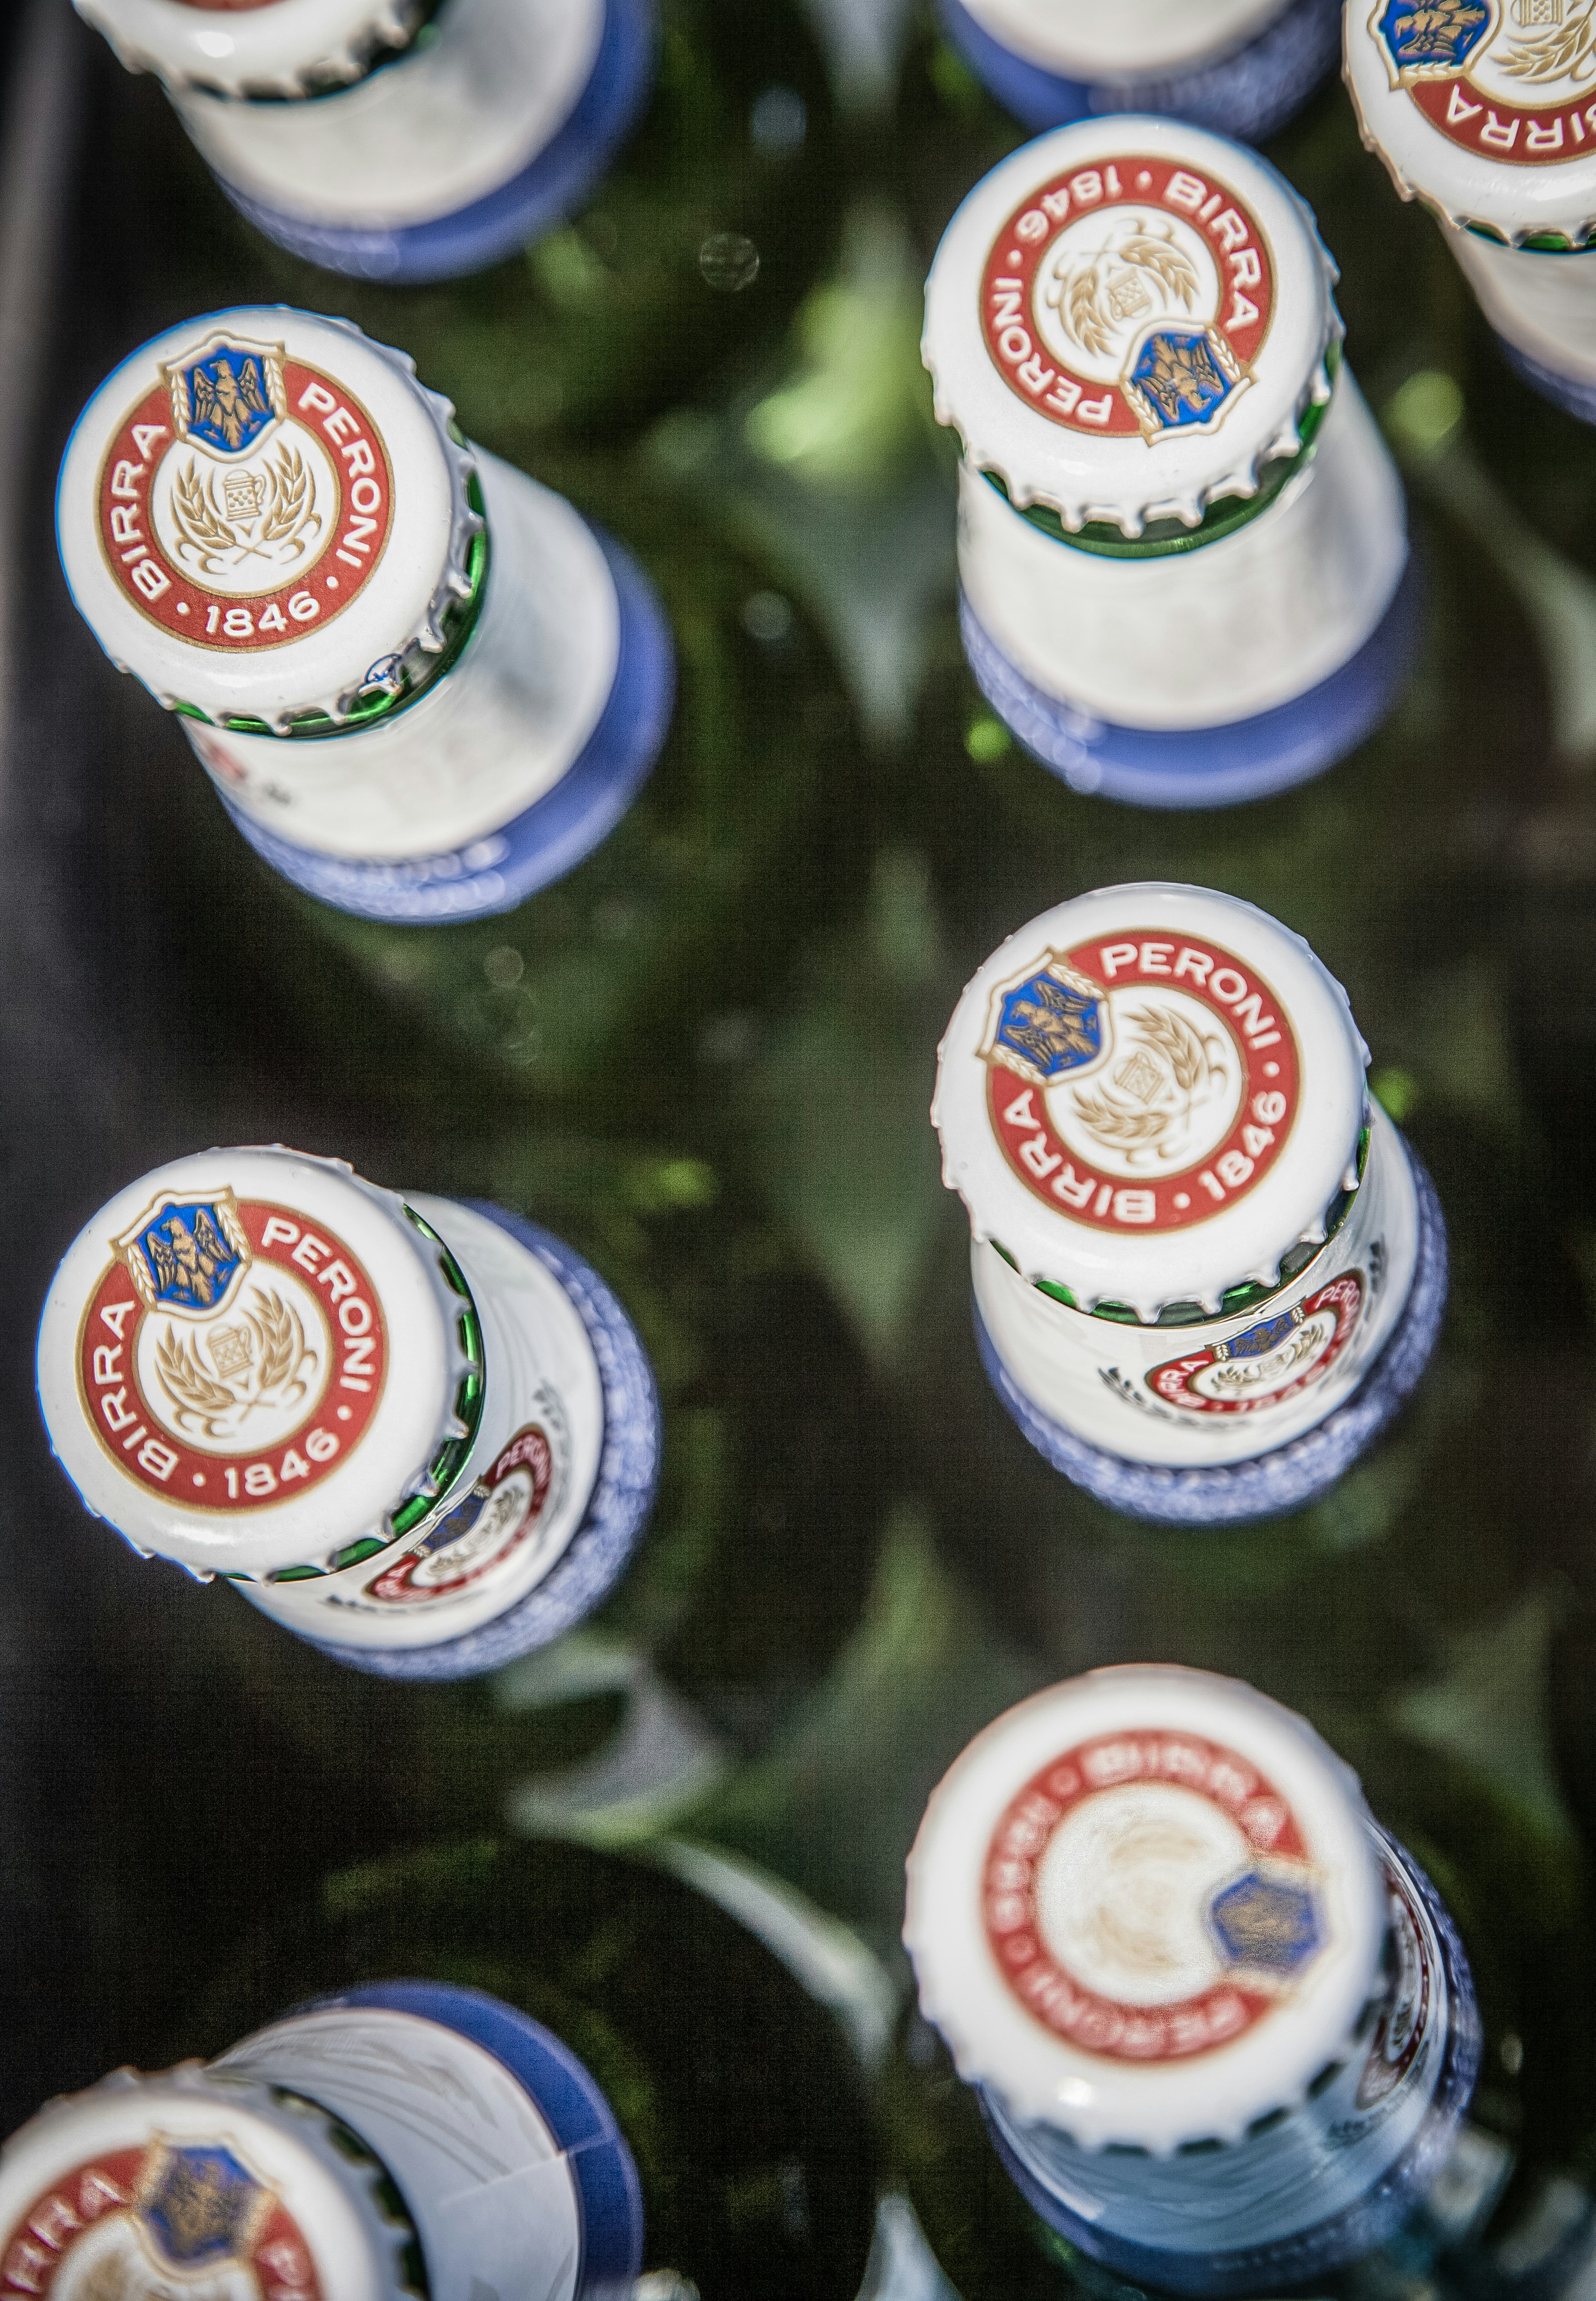 Peroni Birra drink bottle crowns